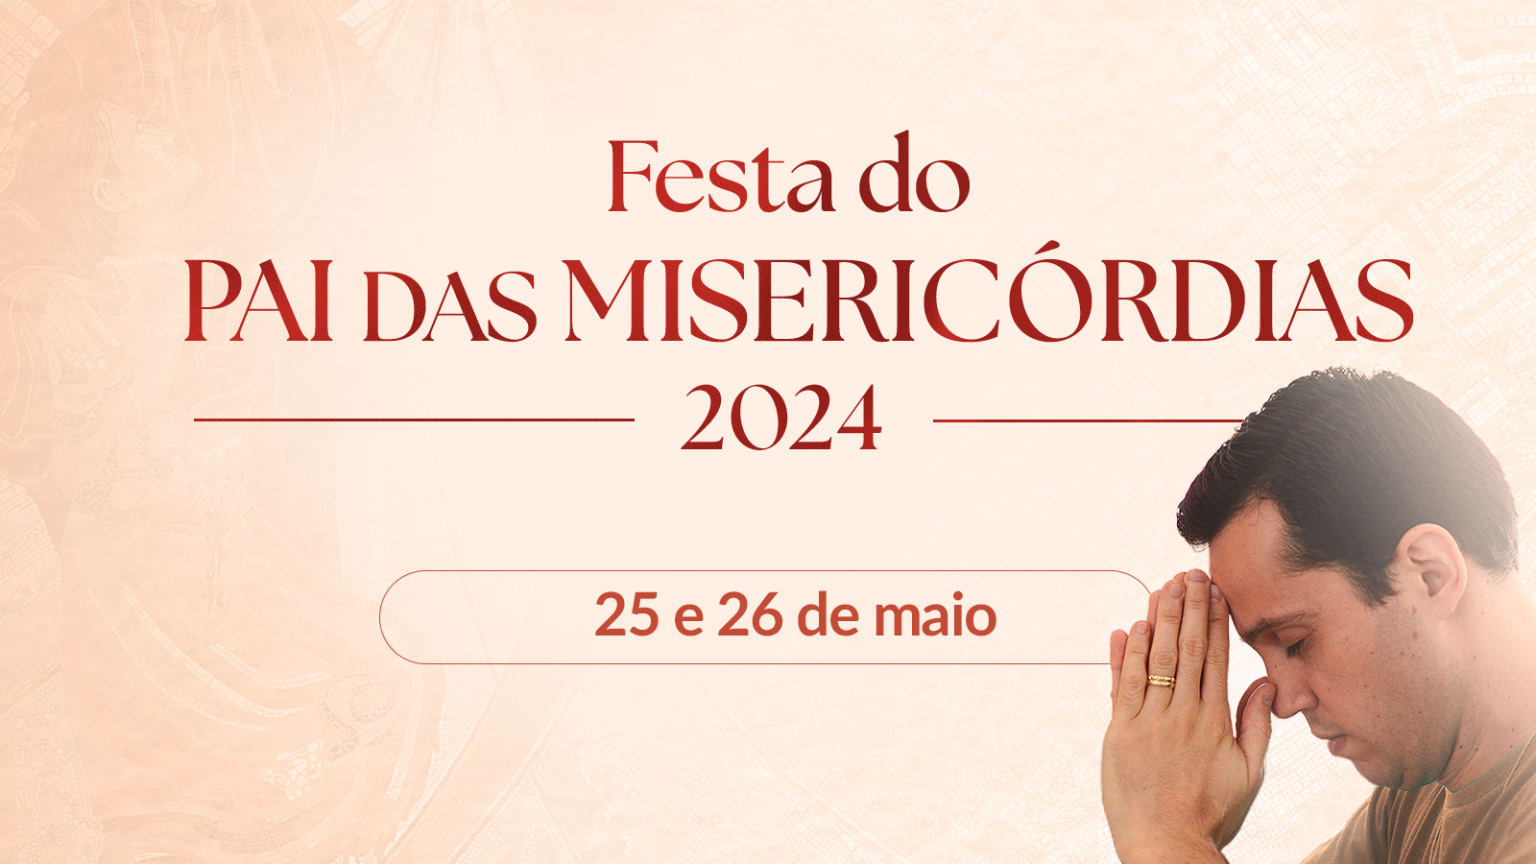 FESTA-DO-PAI-DAS-MISERICORDIAS-2024-SITE-SANTUARIO-V2-1536x864.png